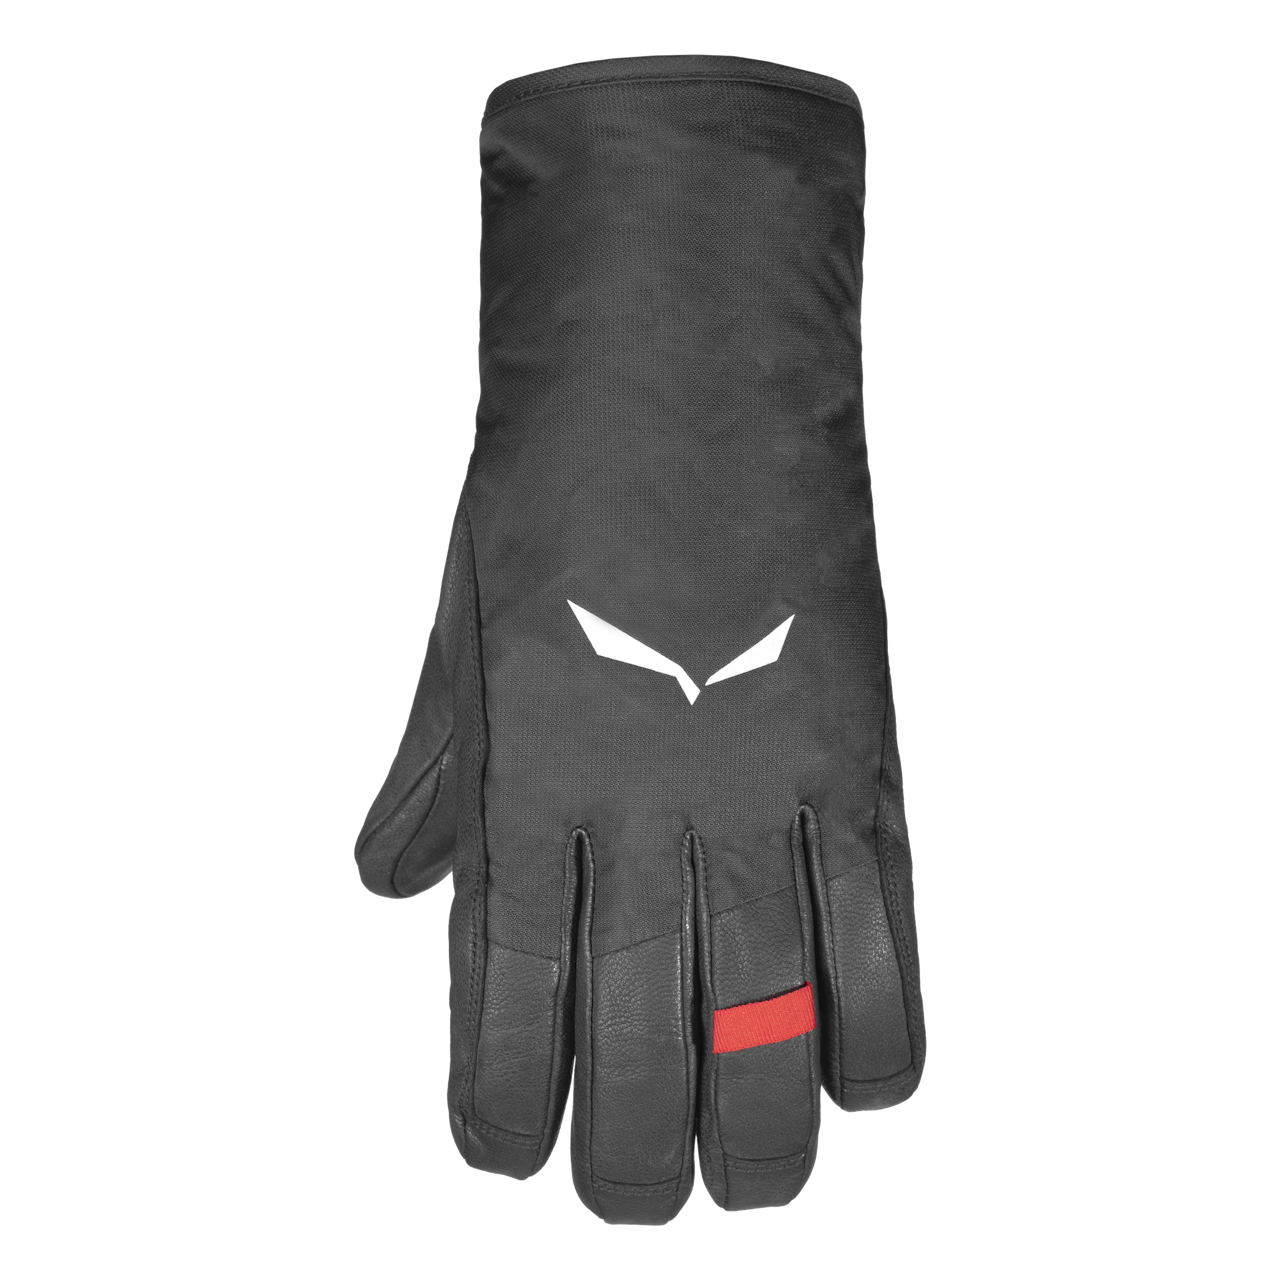 Ortles Powertex Gloves